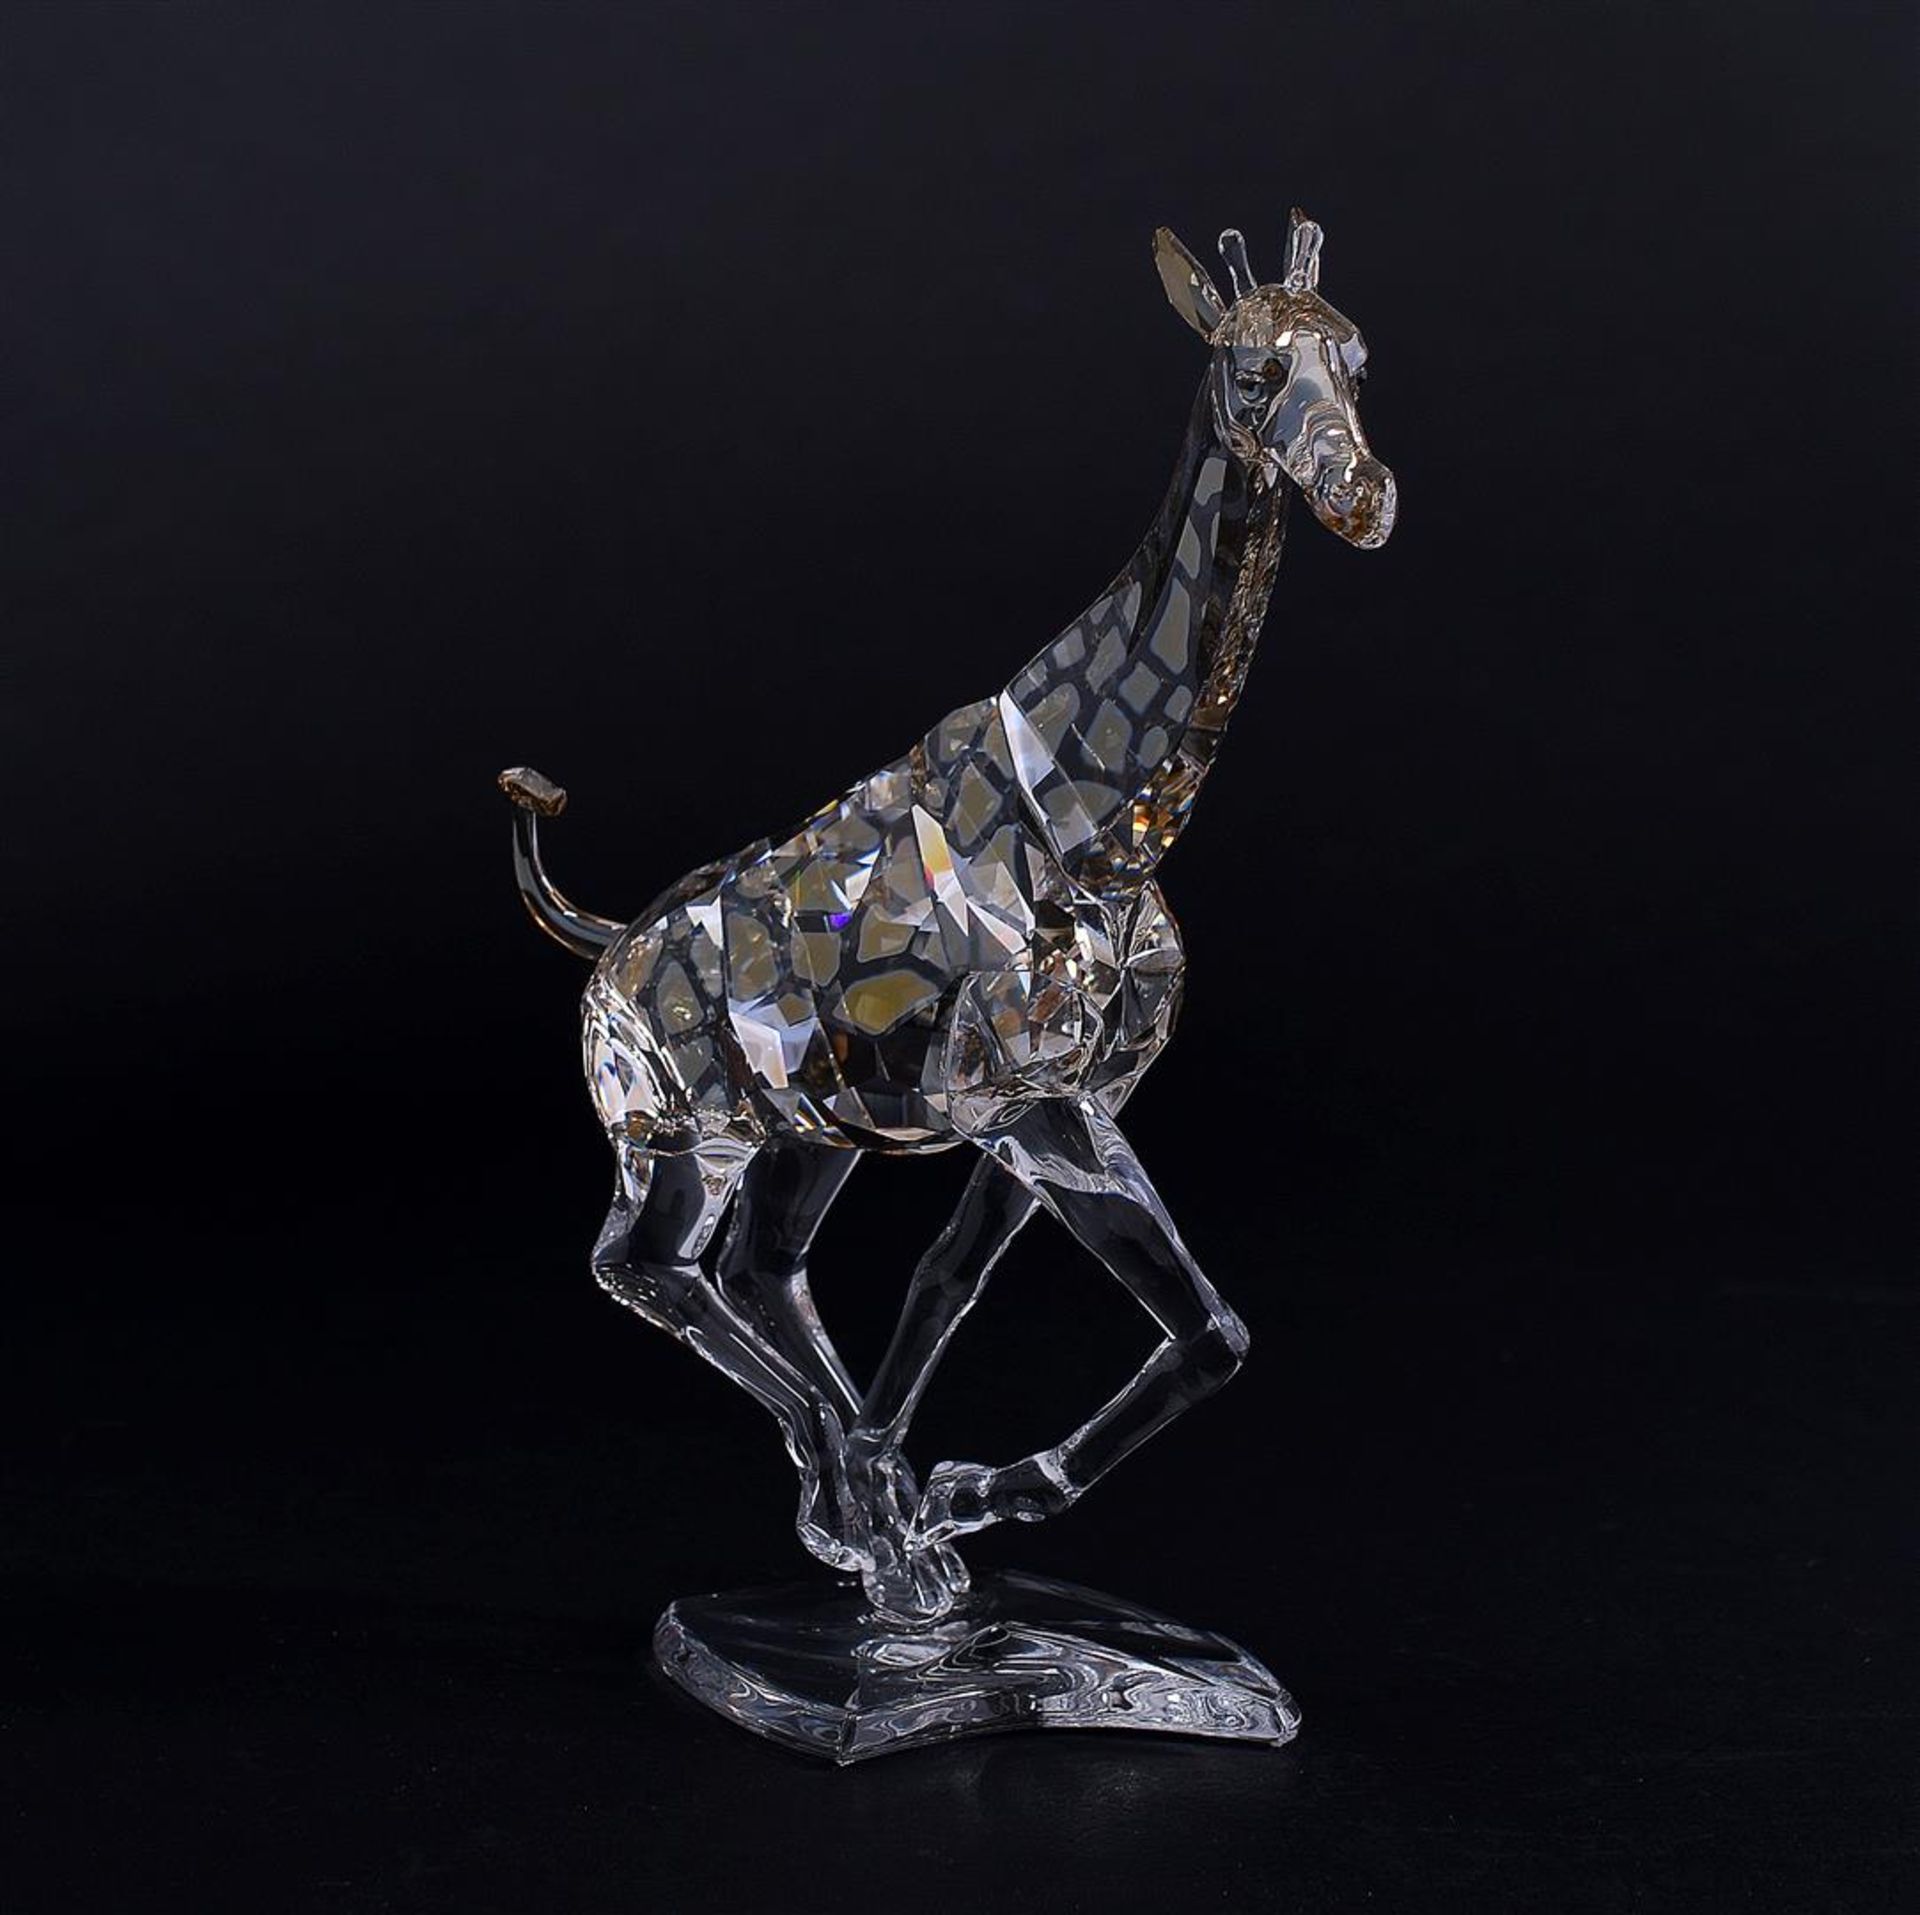 Swarovski, Giraffe, Year of Release 2012, 935896. Includes original box.
17 x 12 cm.